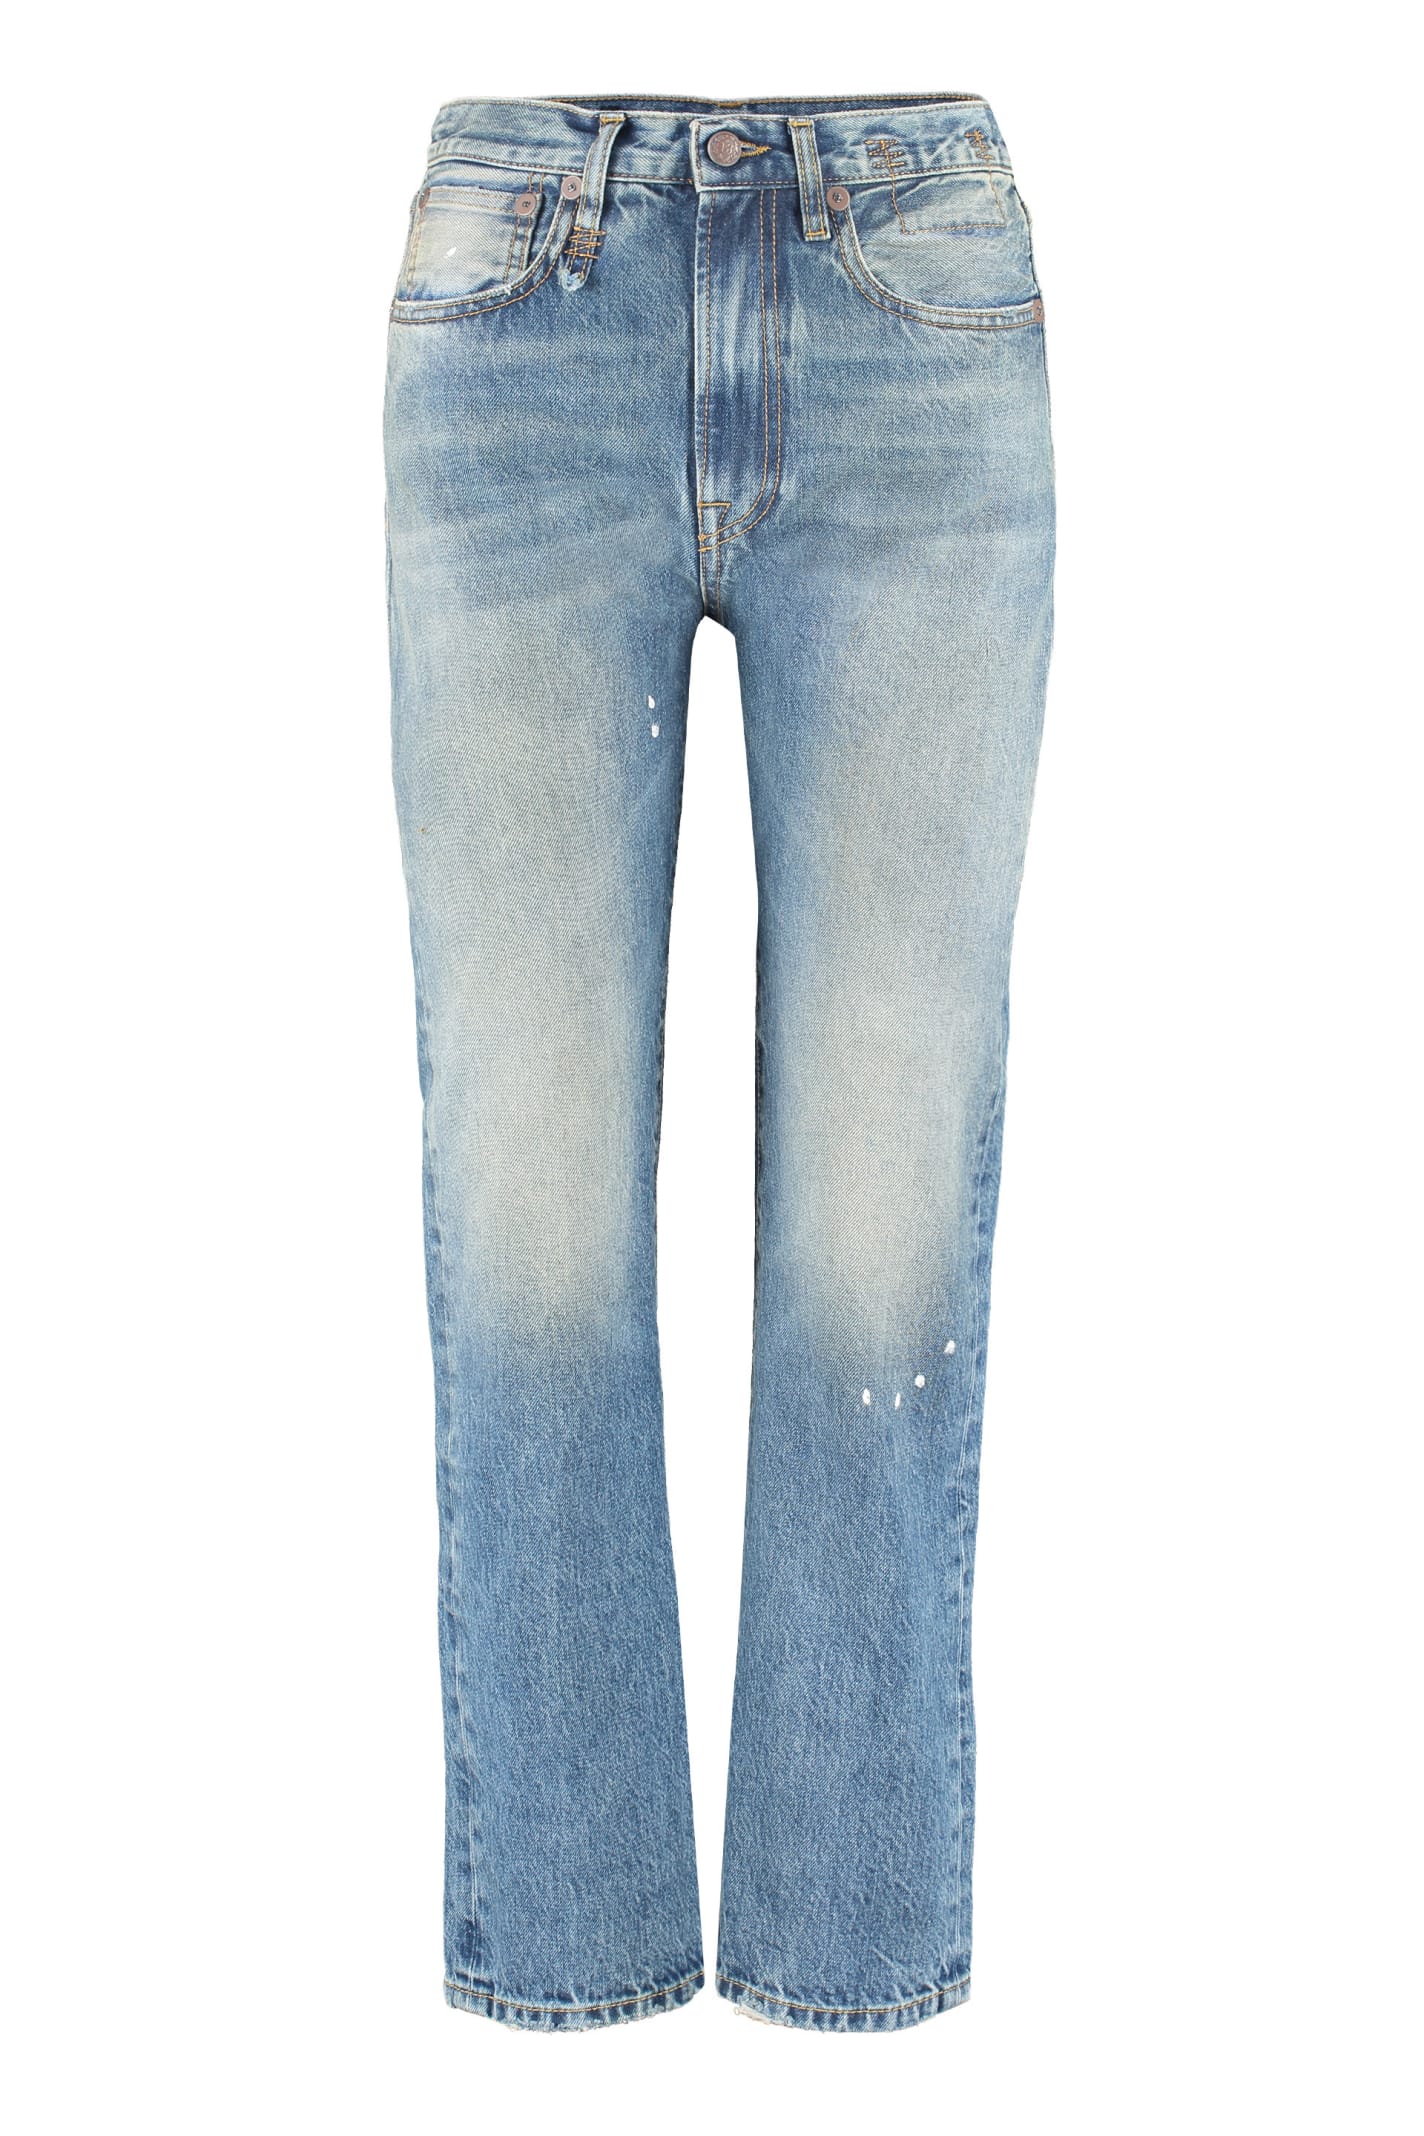 R13 Courtney 5-pocket Jeans